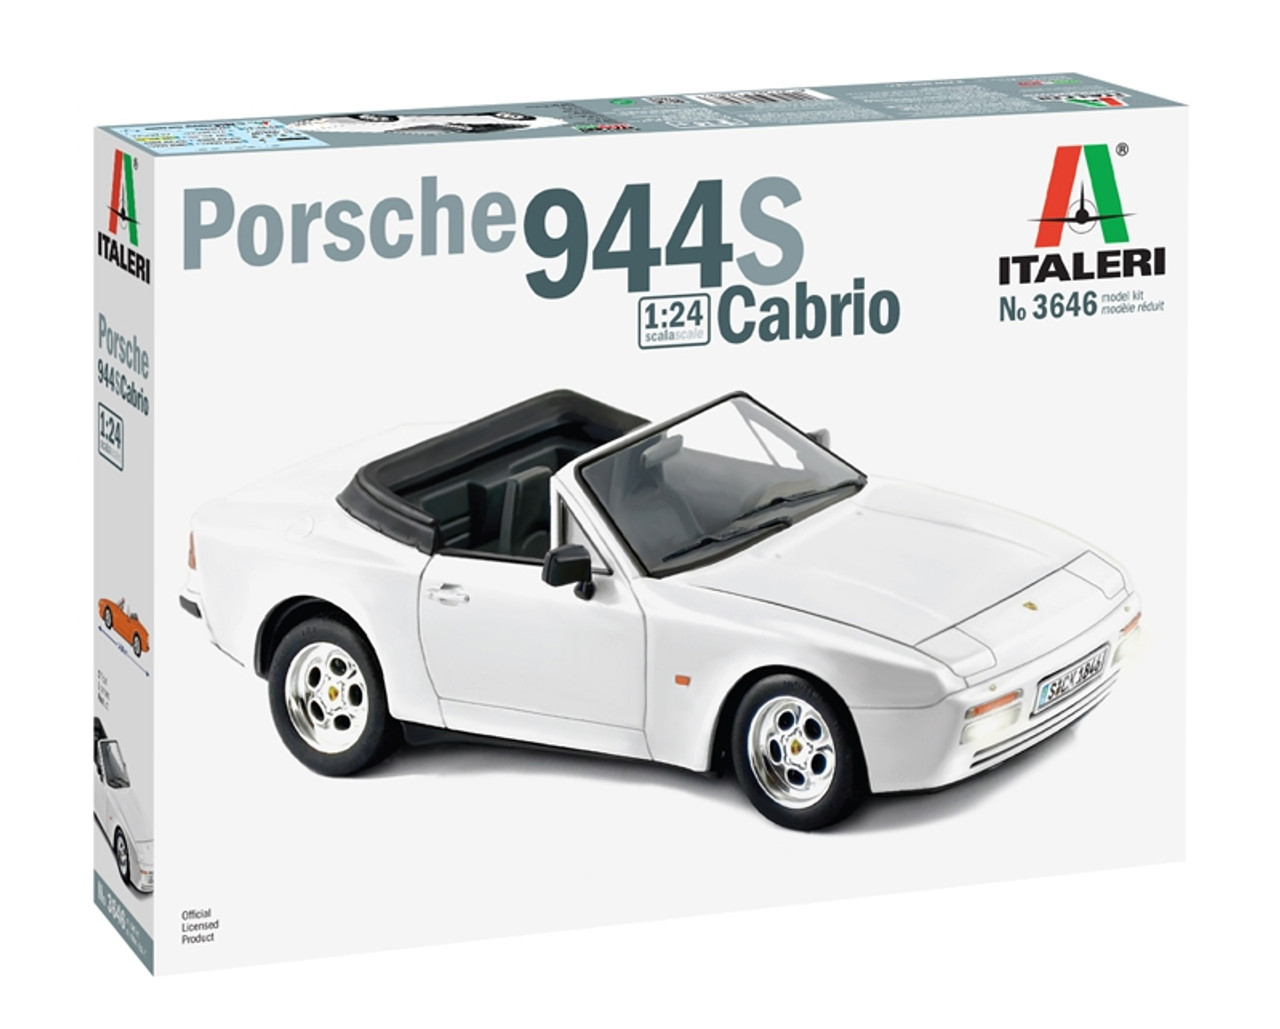 Italeri 553646 1/24 Porsche 944 S Cabrio Model Kit